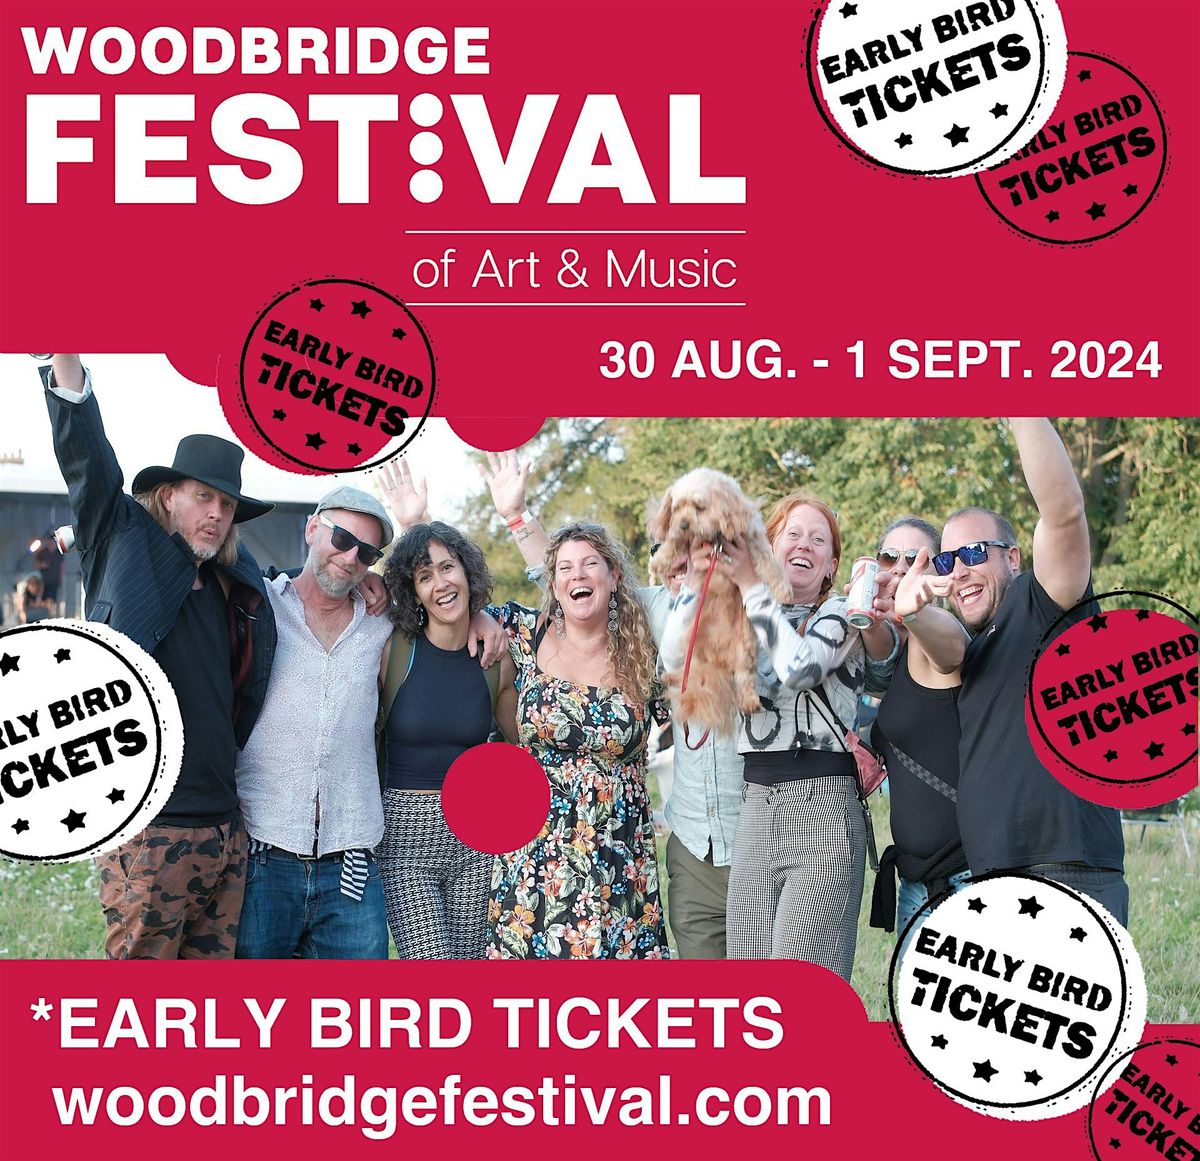 Woodbridge Festival Super Early Bird Tickets second issue